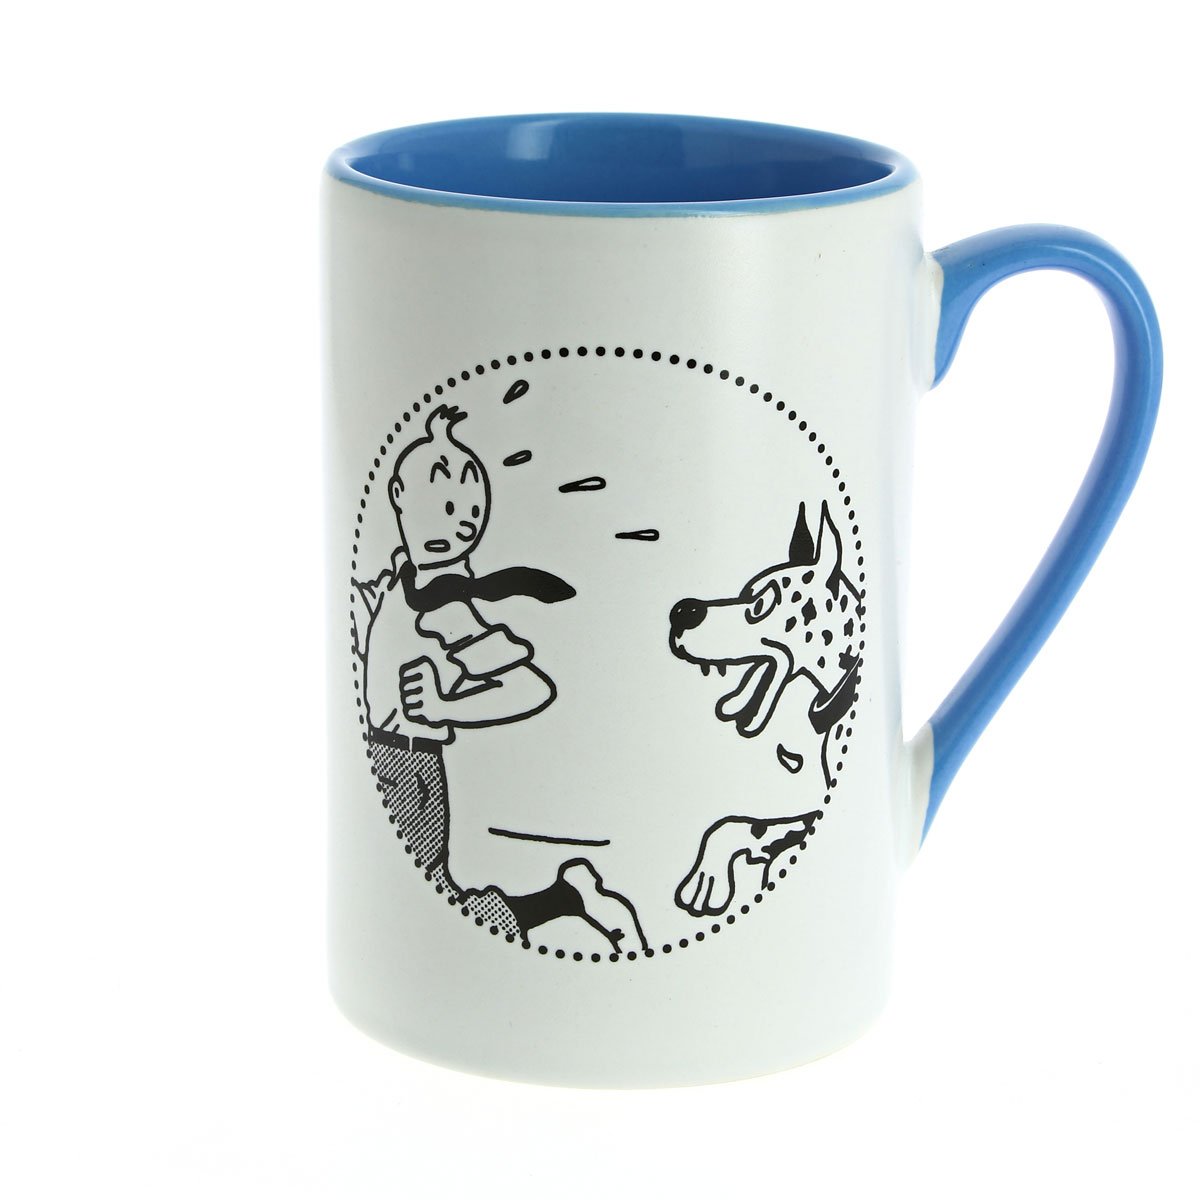 Red & blue Tintin mugs